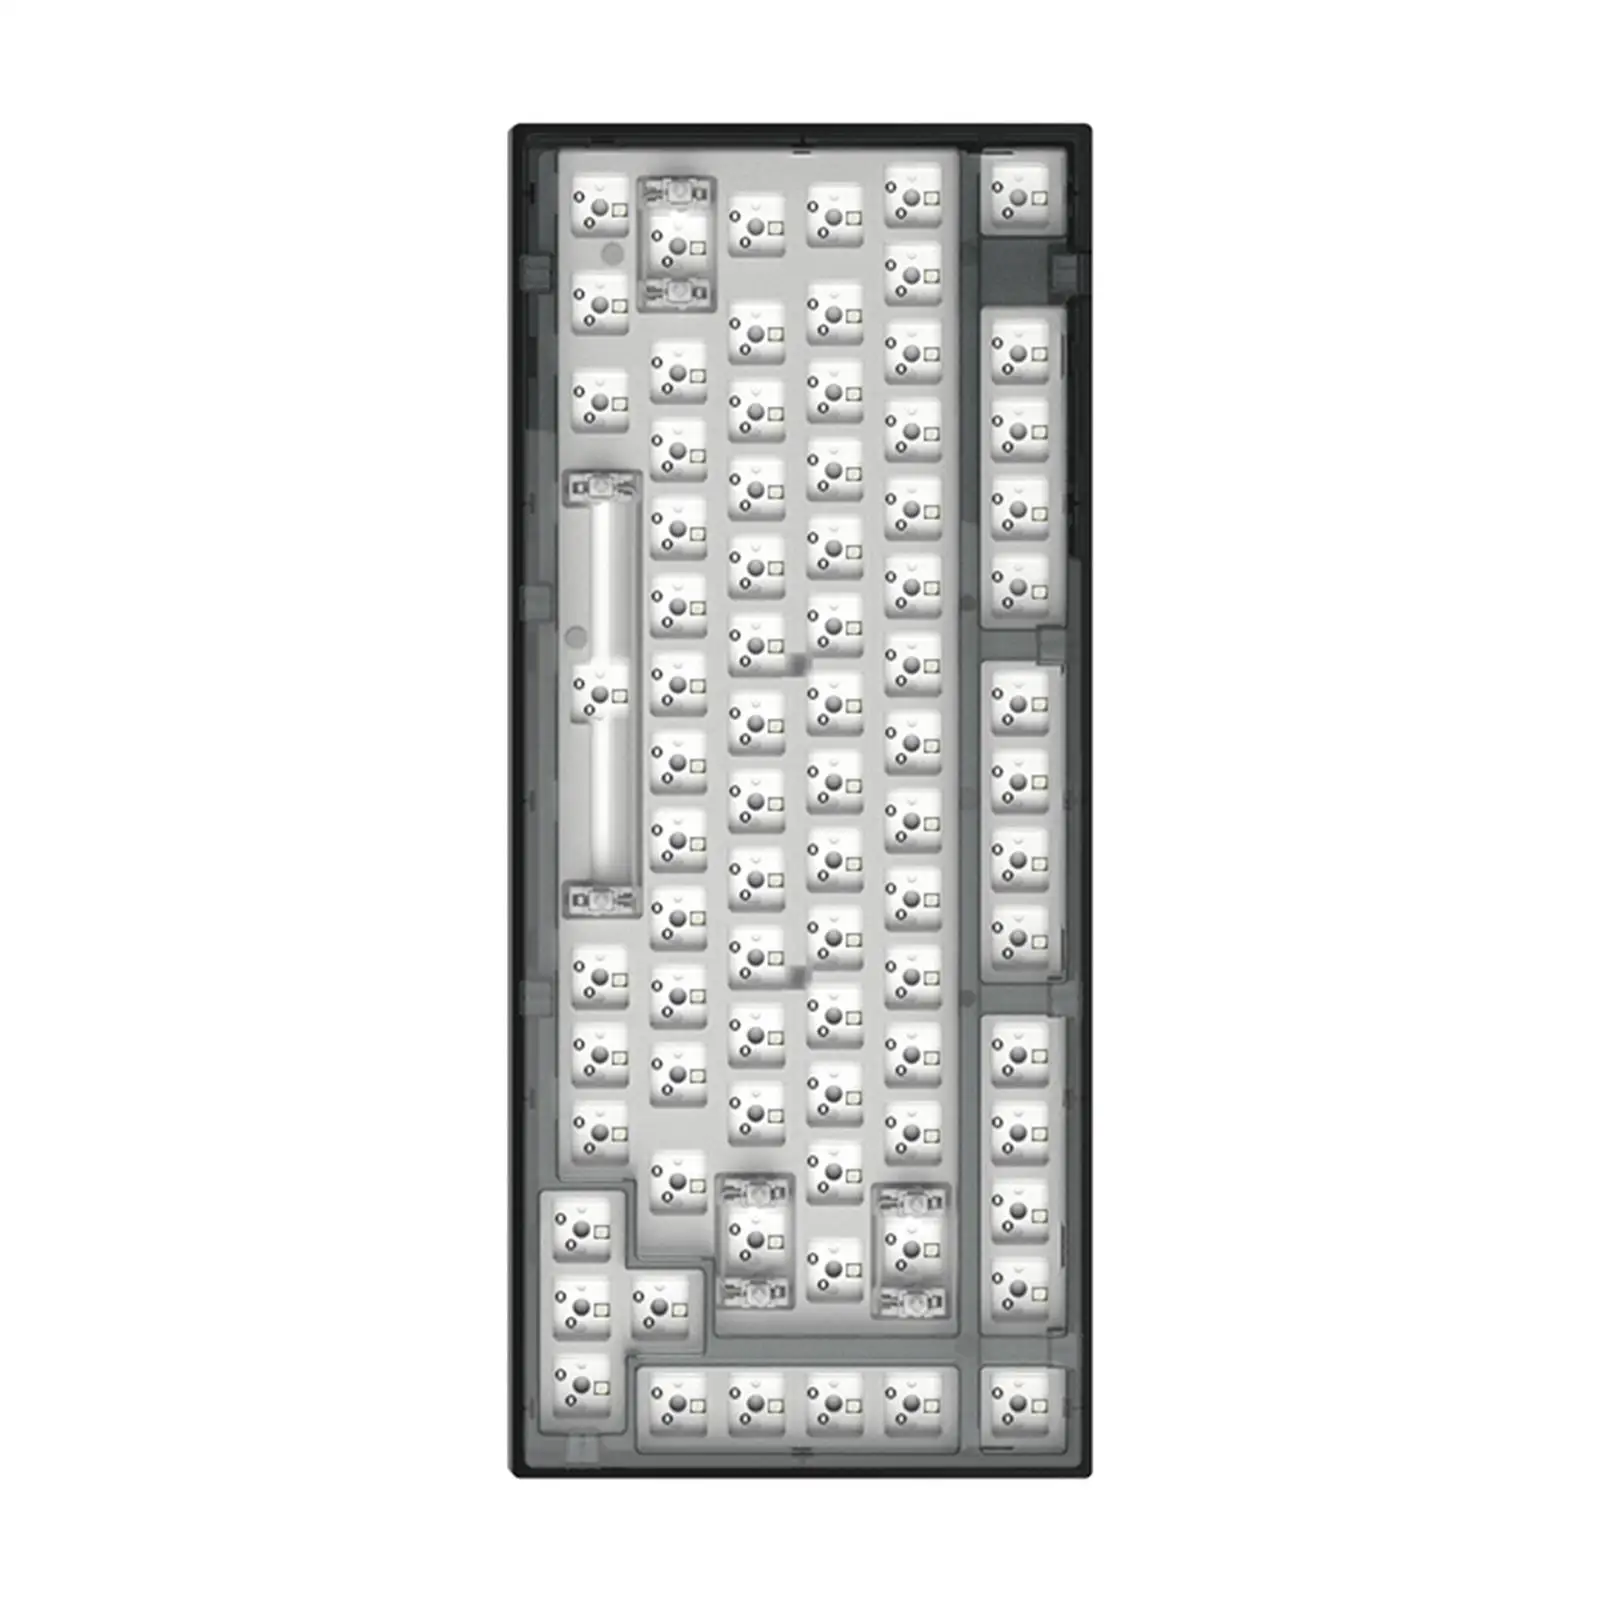 Q75 Mechanical Keyboard Kit 82 Key PCB Design Tyce-C Interface Hot-Swappable RGB Backlit Keyboard DIY Kit for Laptop Dual System